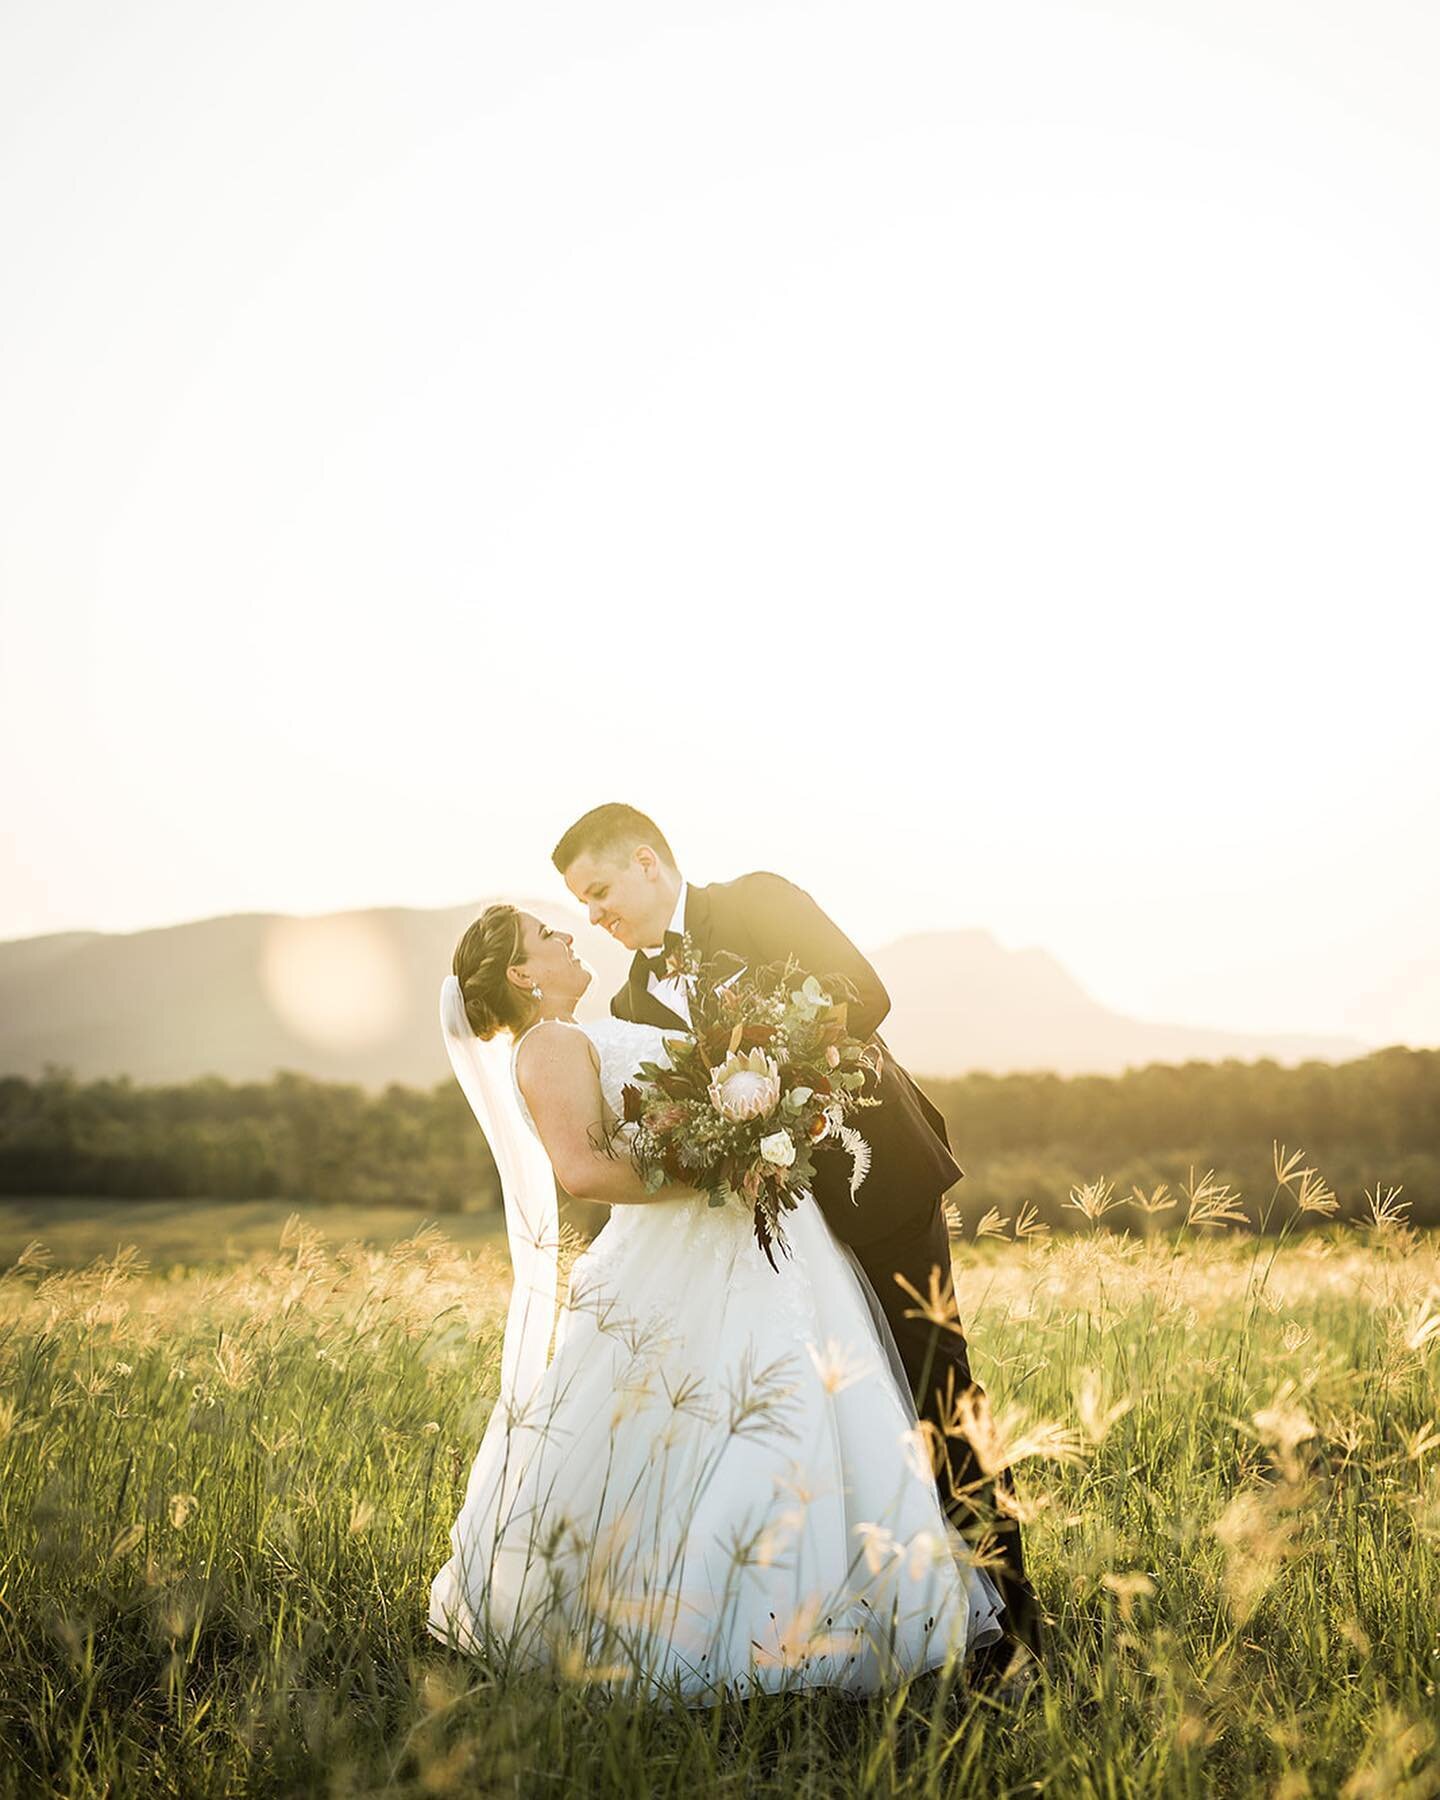 Sun kissed summer days in the Hunter memories for this frosty day.

📷: @alpha_imagery_au 
Venue: @bimbadgenpalmerslane 
H&amp;MU: @cmphairartistry 
Celebrant: @celebrant_sophie 

#bride #groom #bridalbouquet #buttonhole #weddingflorist #huntervalley